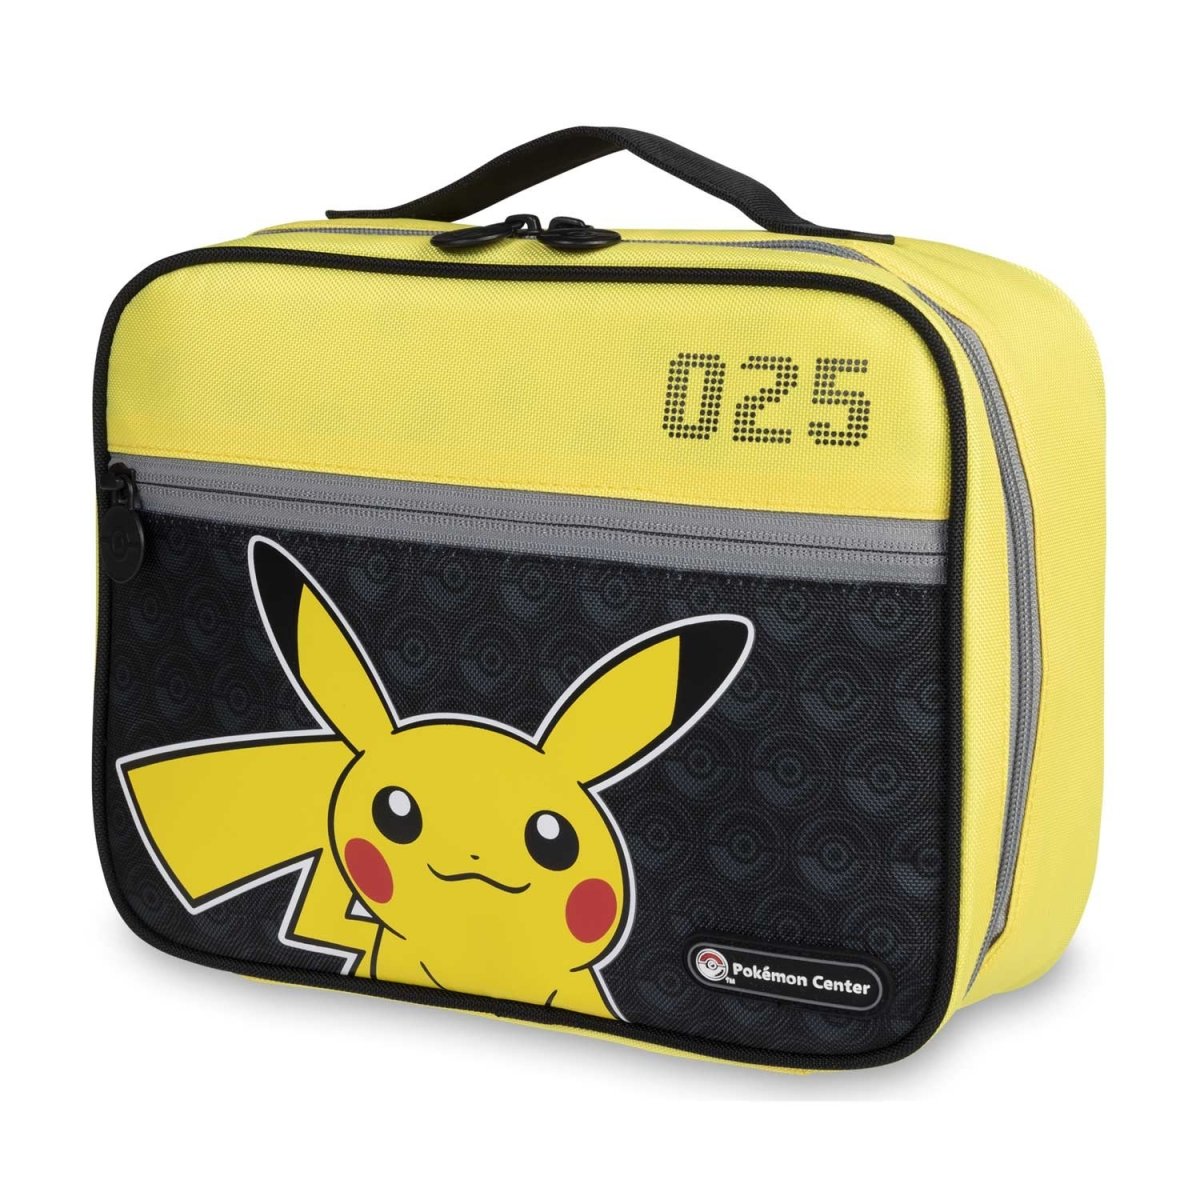 Pokemon Lunch Boxes, Pokemon Figures Box, Pokemon Lunch Bags